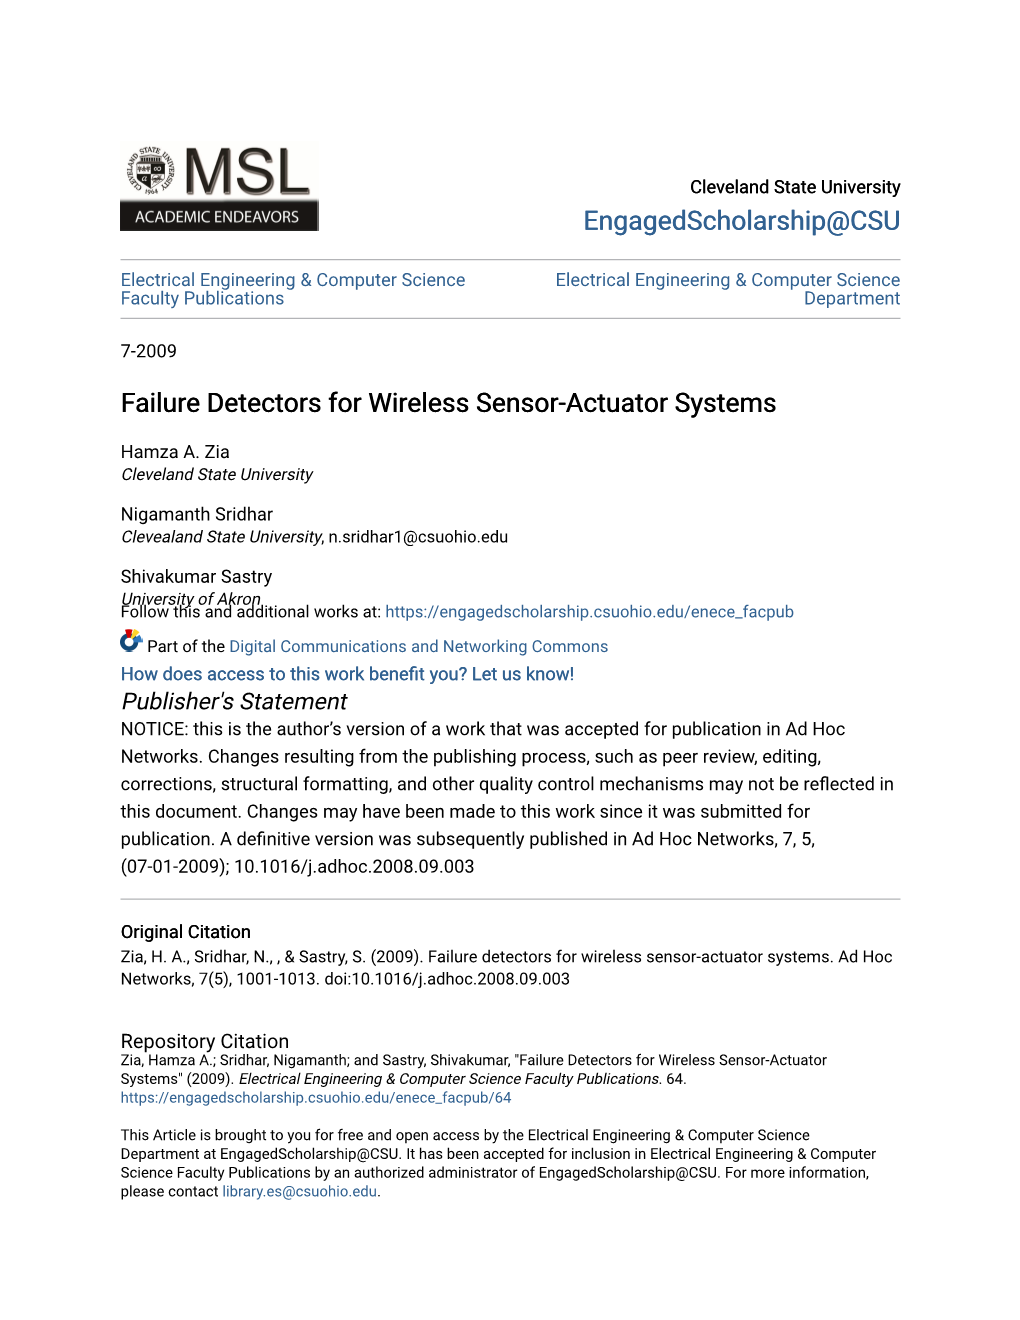 Failure Detectors for Wireless Sensor-Actuator Systems